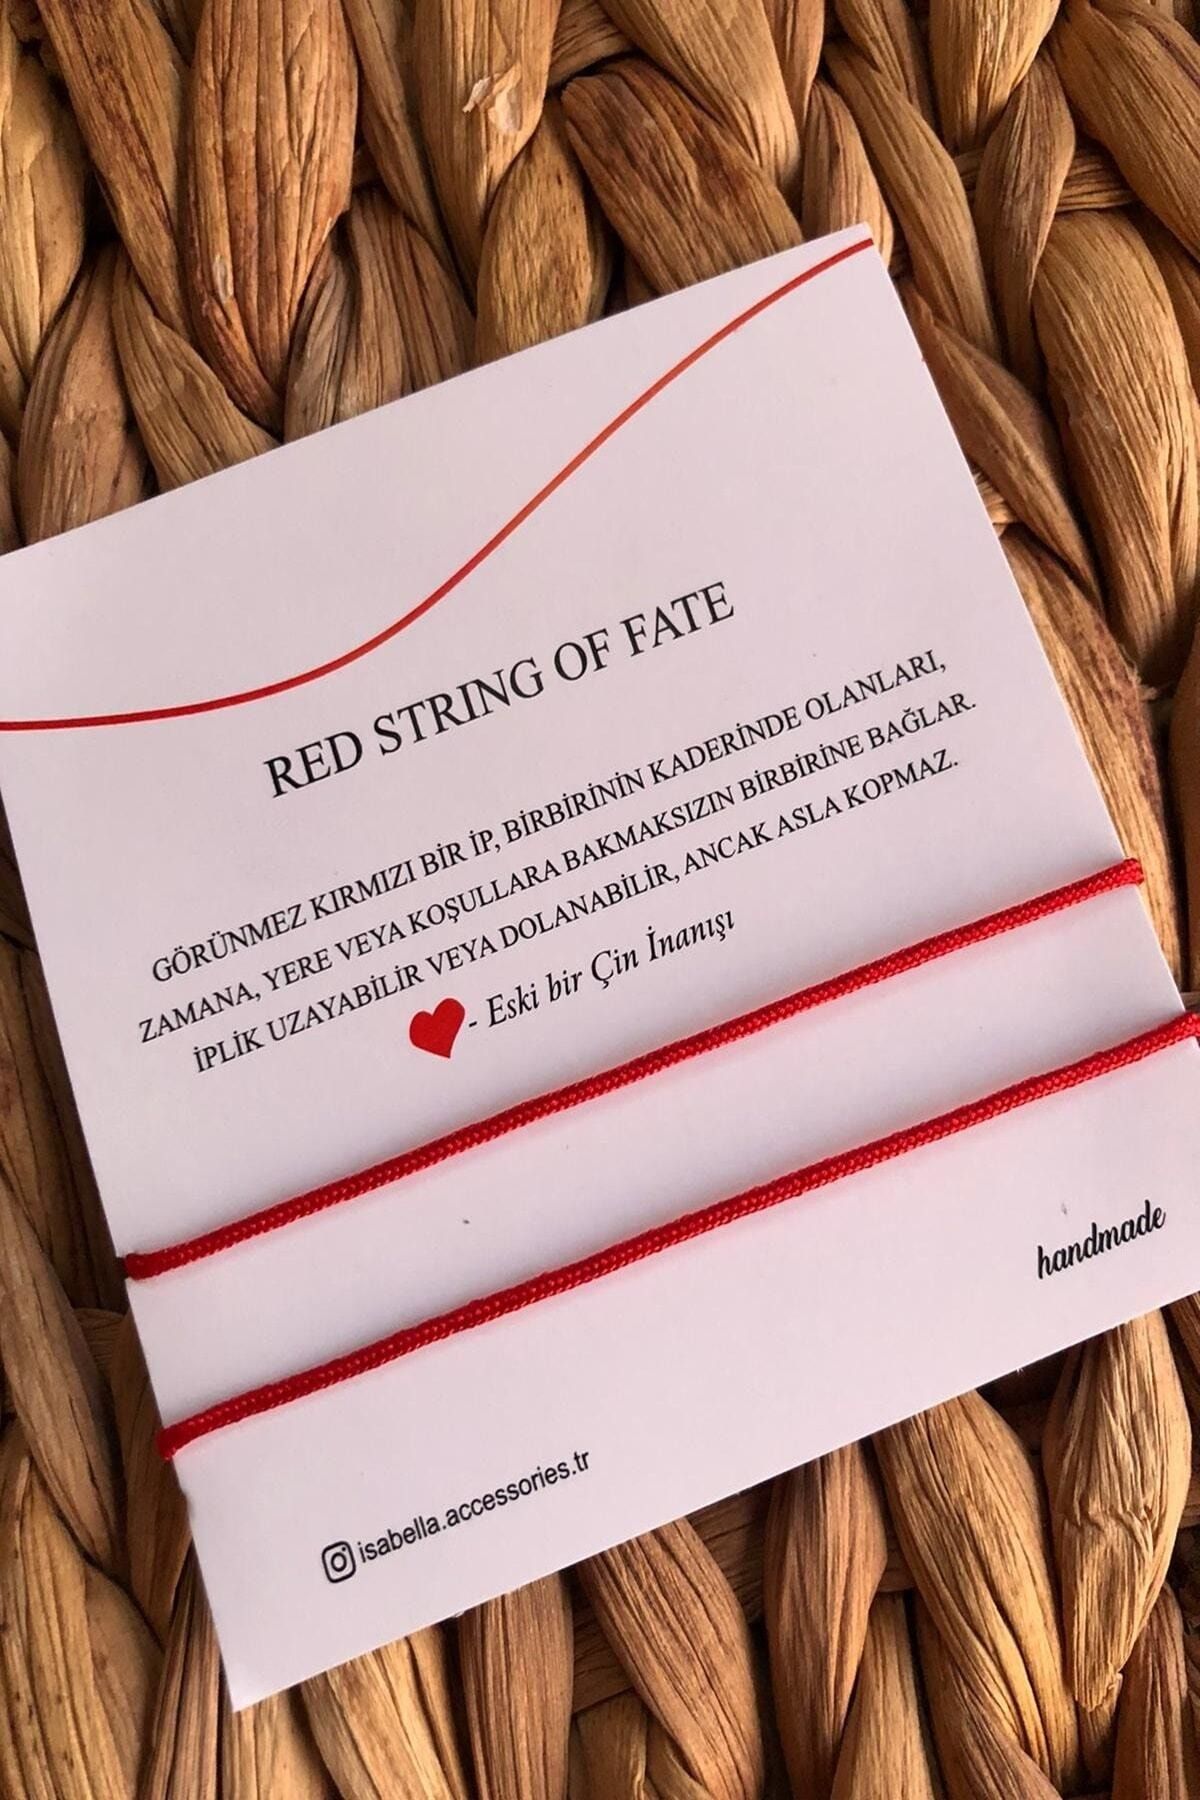 İsabella Accessories Red String Kırmızı İp Çift Bileklik Sevgili Bilekliği